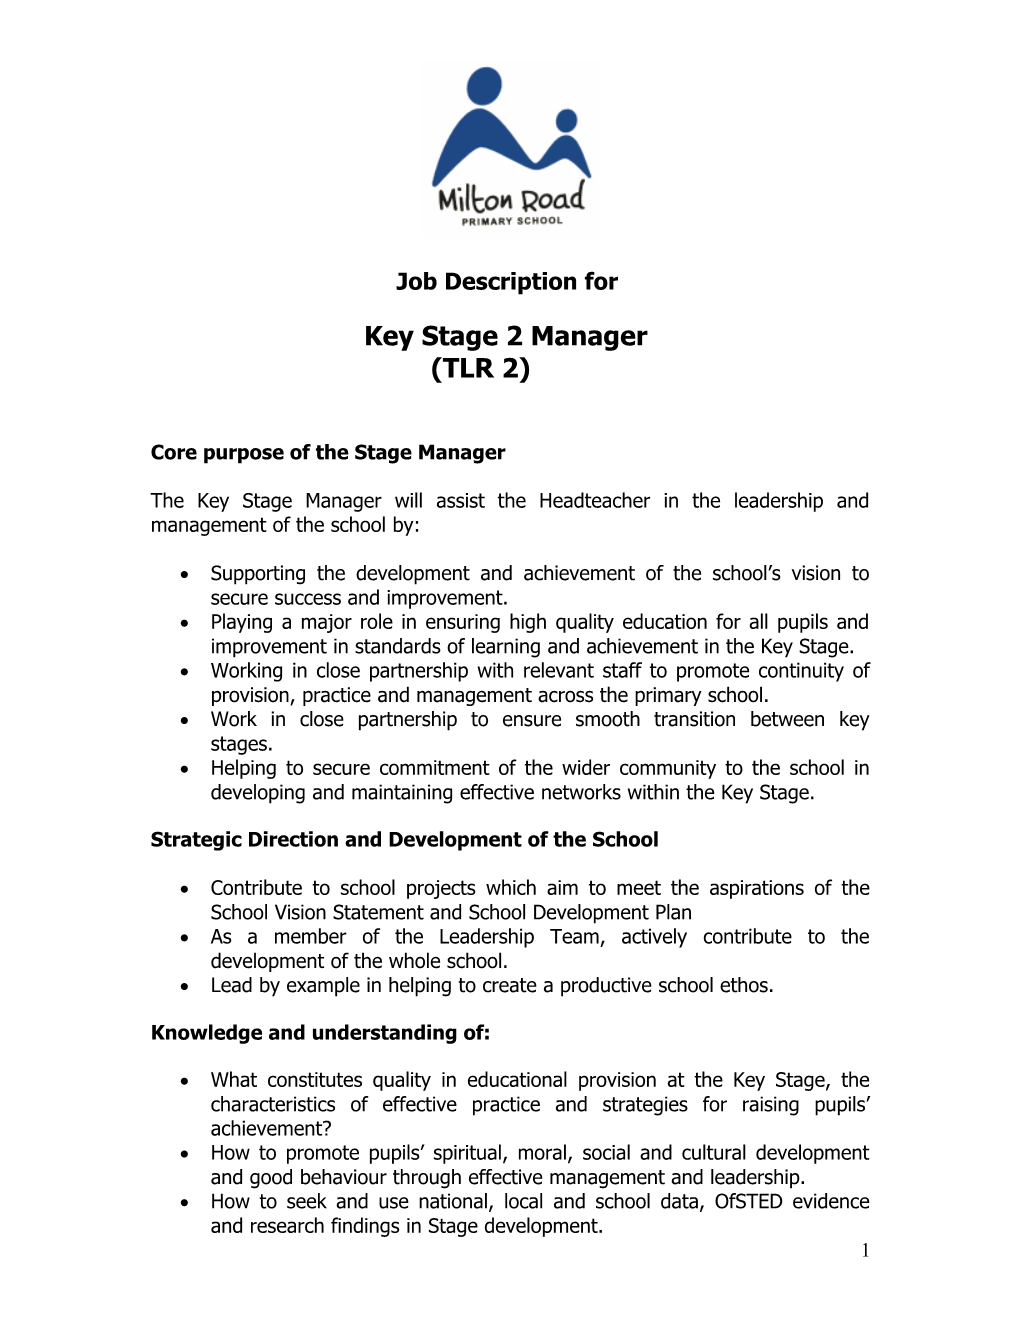 Key Stage Manager JD KS1